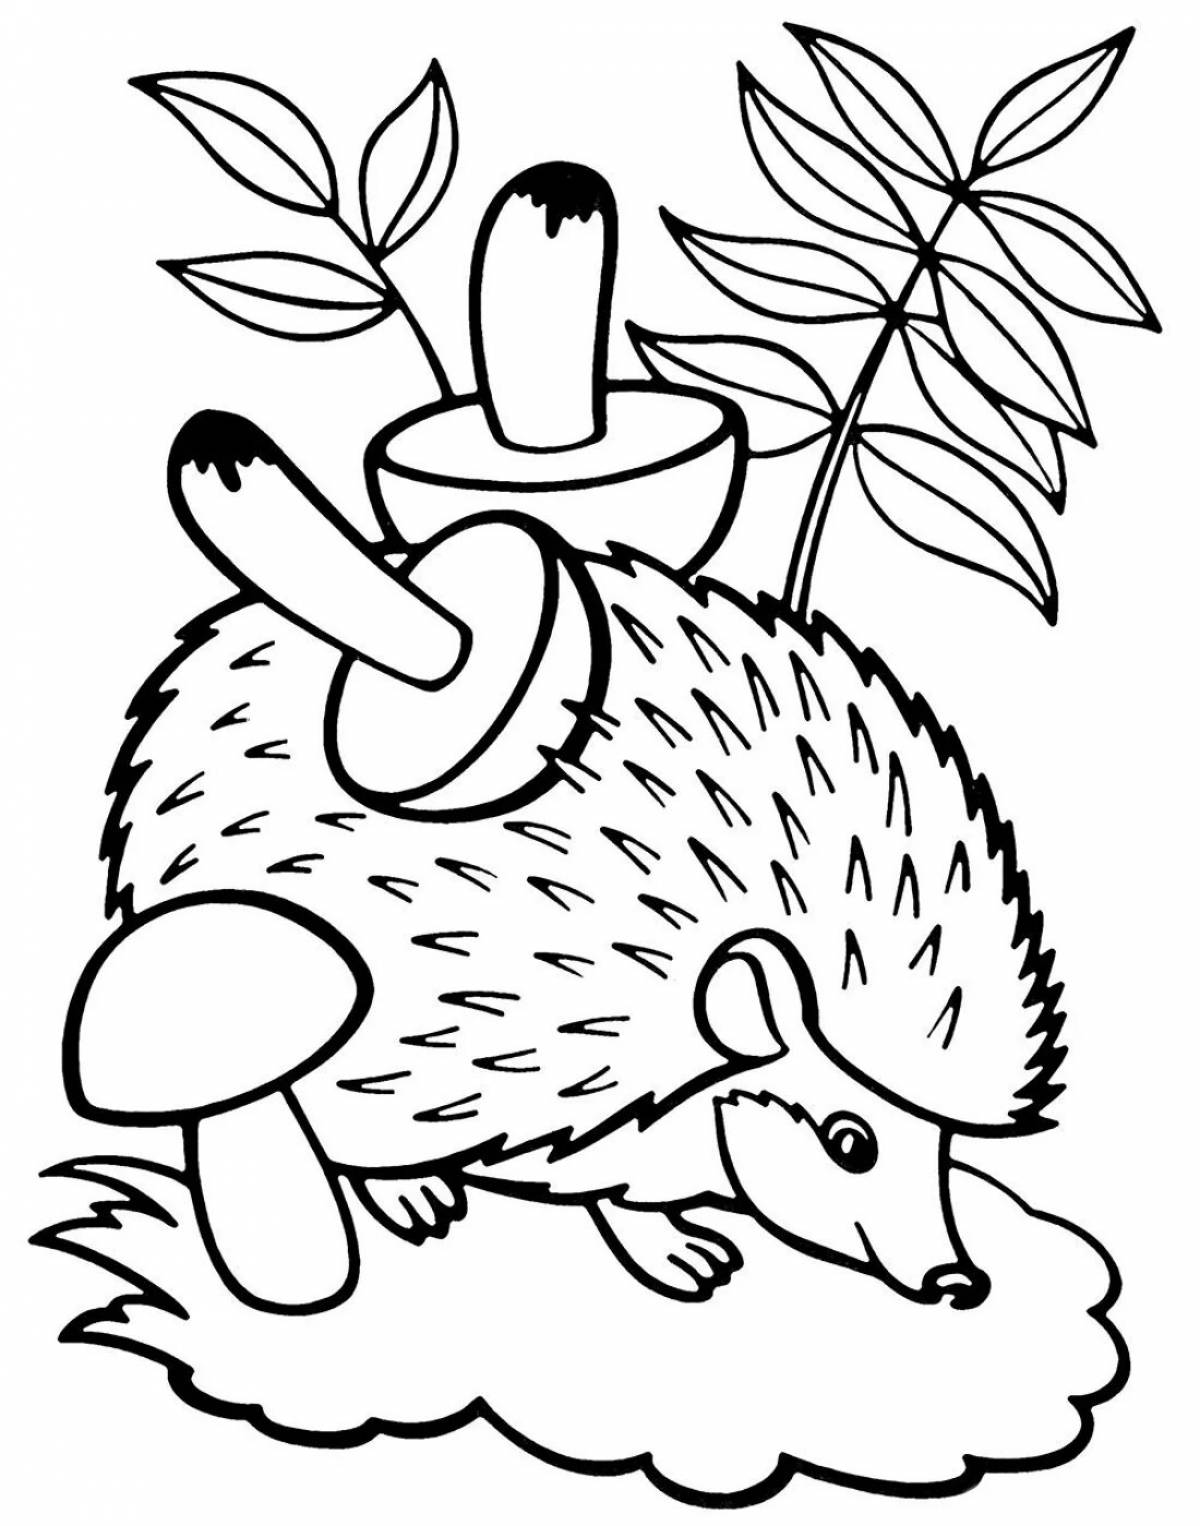 Hedgehog with mushrooms #2